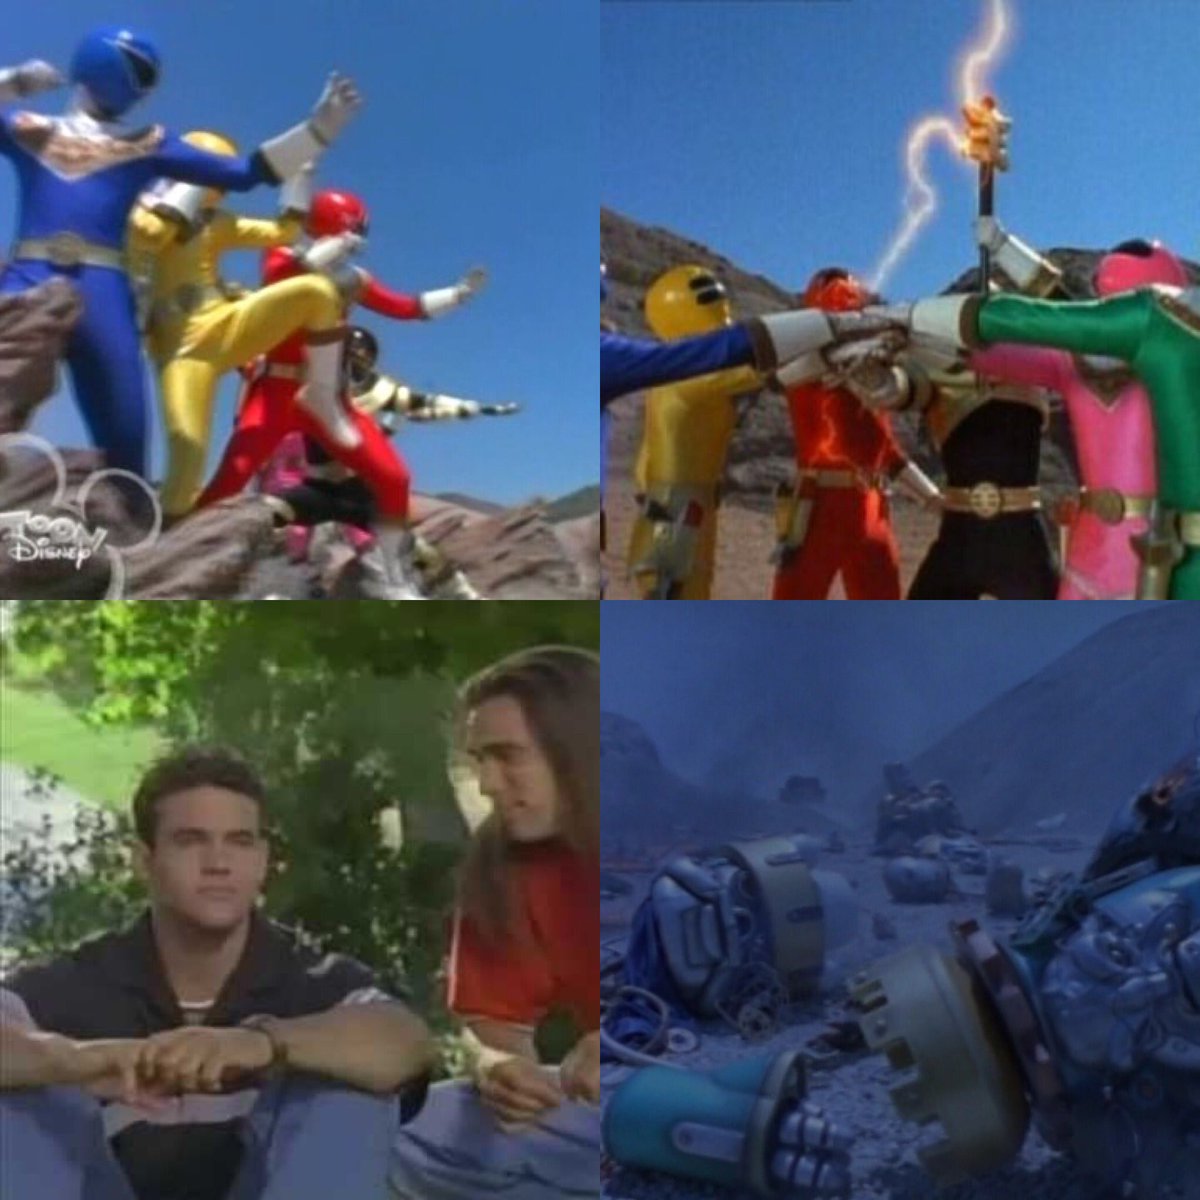 Power Rangers Zeo - Ending Episode - #GoodAsGold! ⚡️
.
.
.
.
.
#PowerRangersZeo #ZeoRangers #GoZeo #StrongerThanBefore #MachineEmpire #ZeoPowerRangers #ZeoCrystal #KingMondo #GoodAsGold